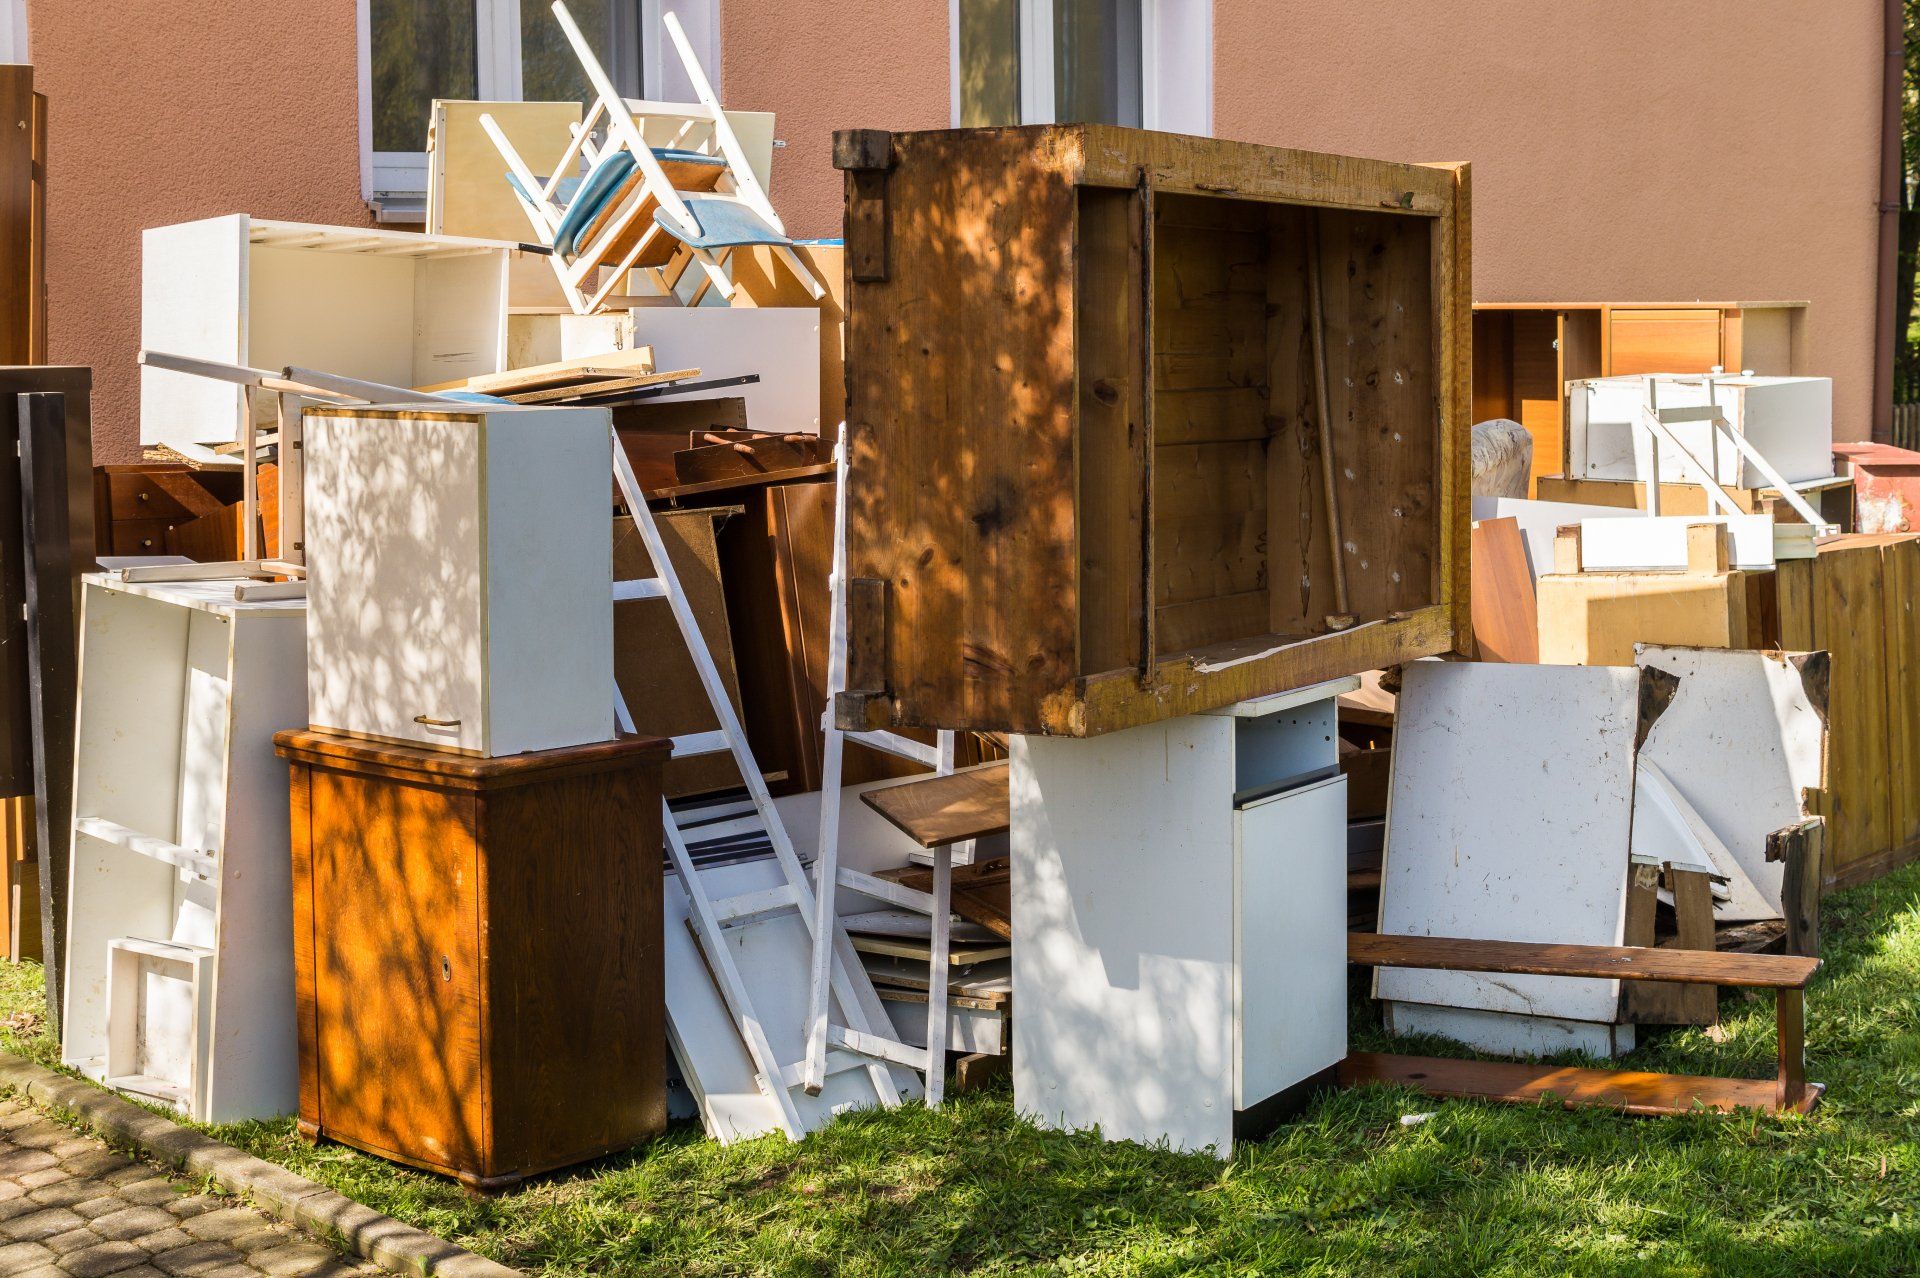 Furniture Removal in Brandon, FL | Wayne & Sons Landscaping & Junk Removal